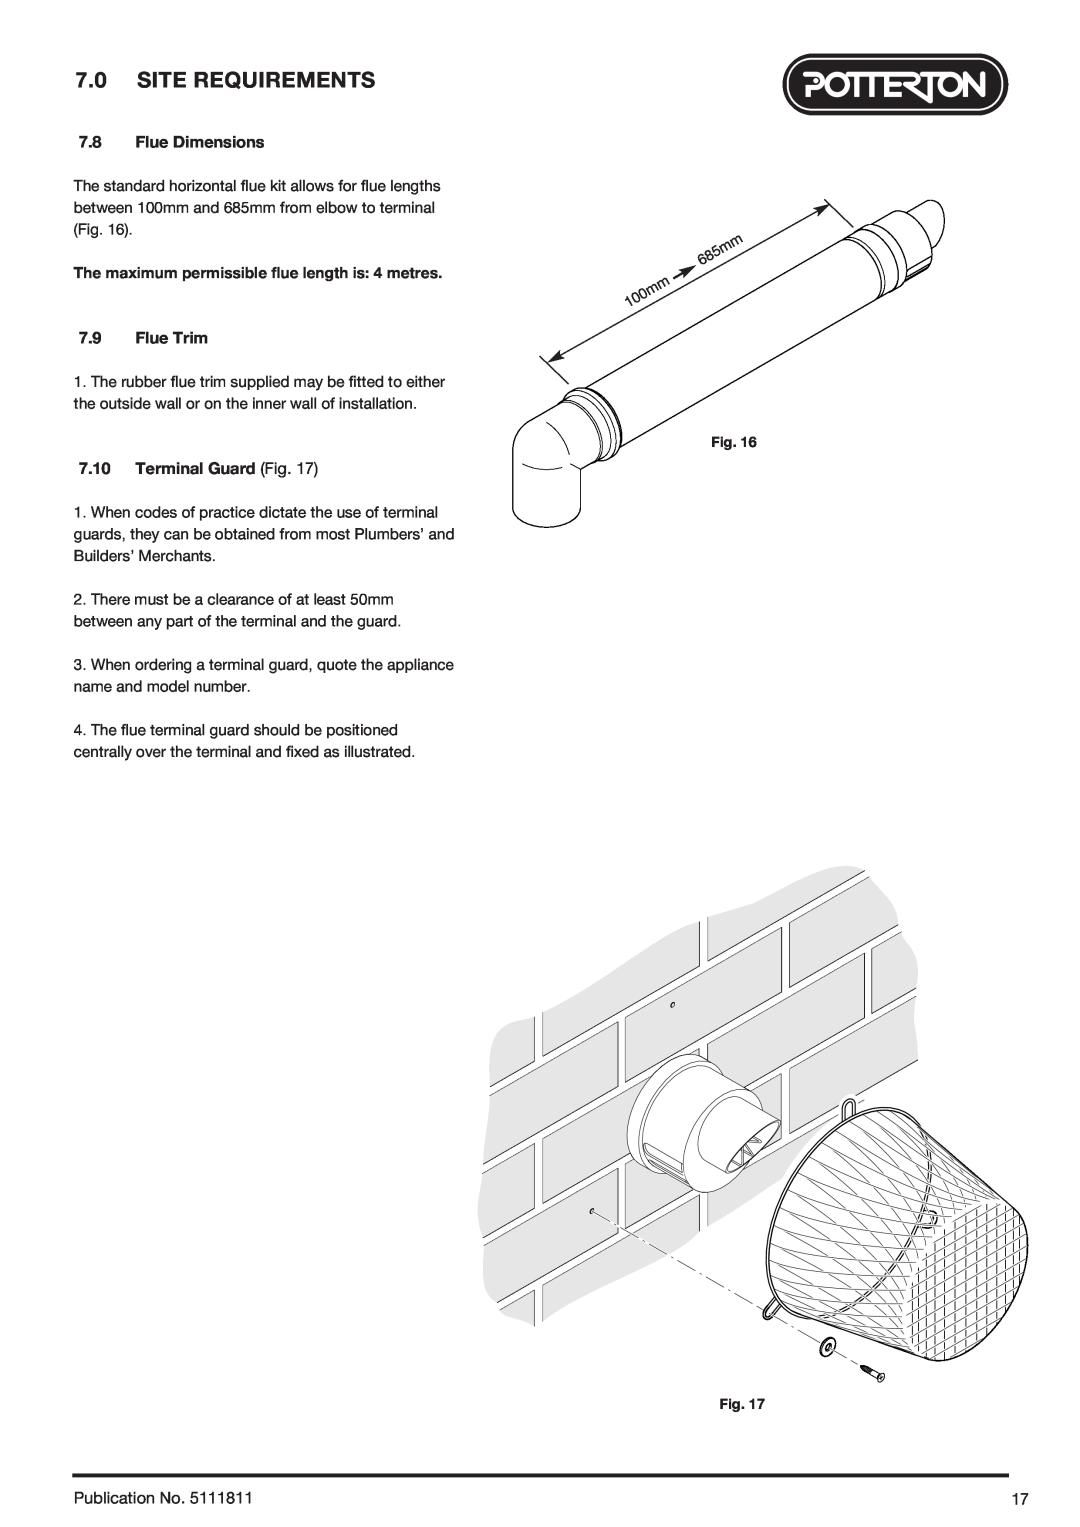 Baxi Potterton 24 Eco HE manual Flue Dimensions, Flue Trim, Terminal Guard Fig, Publication No 